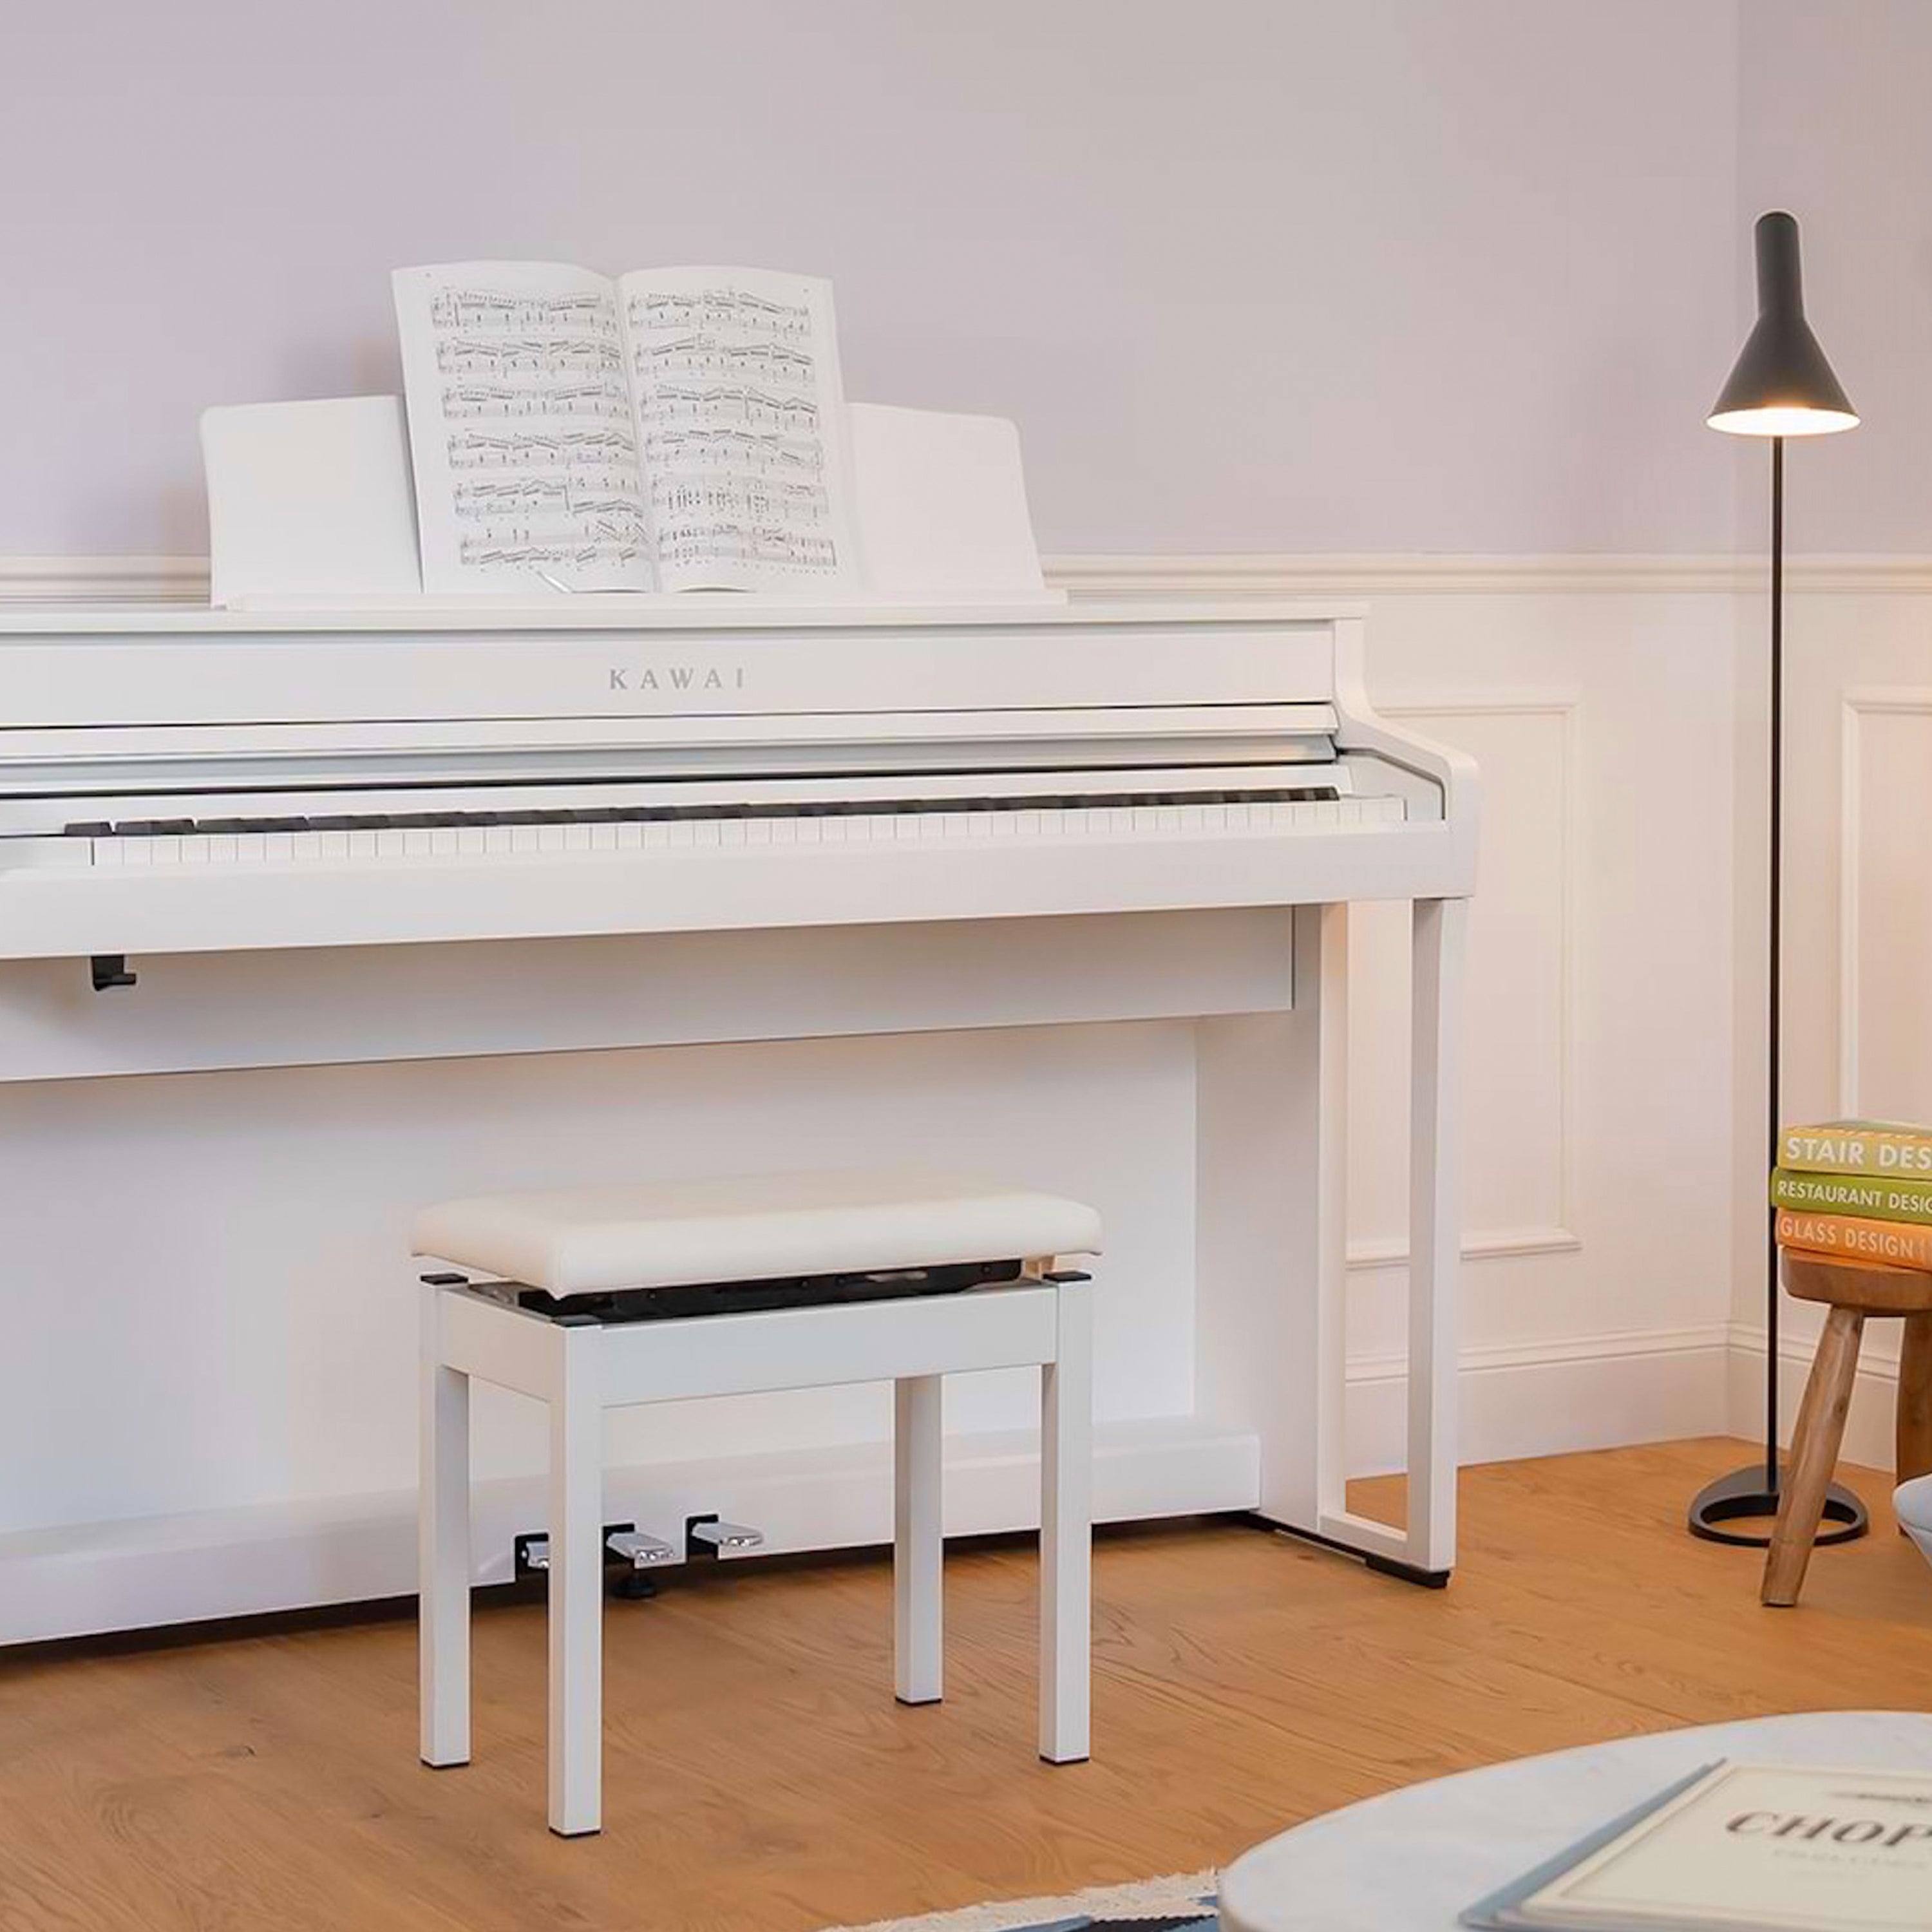 Kawai CA501 Concert Artist Digital Piano - Satin White in a stylish living room